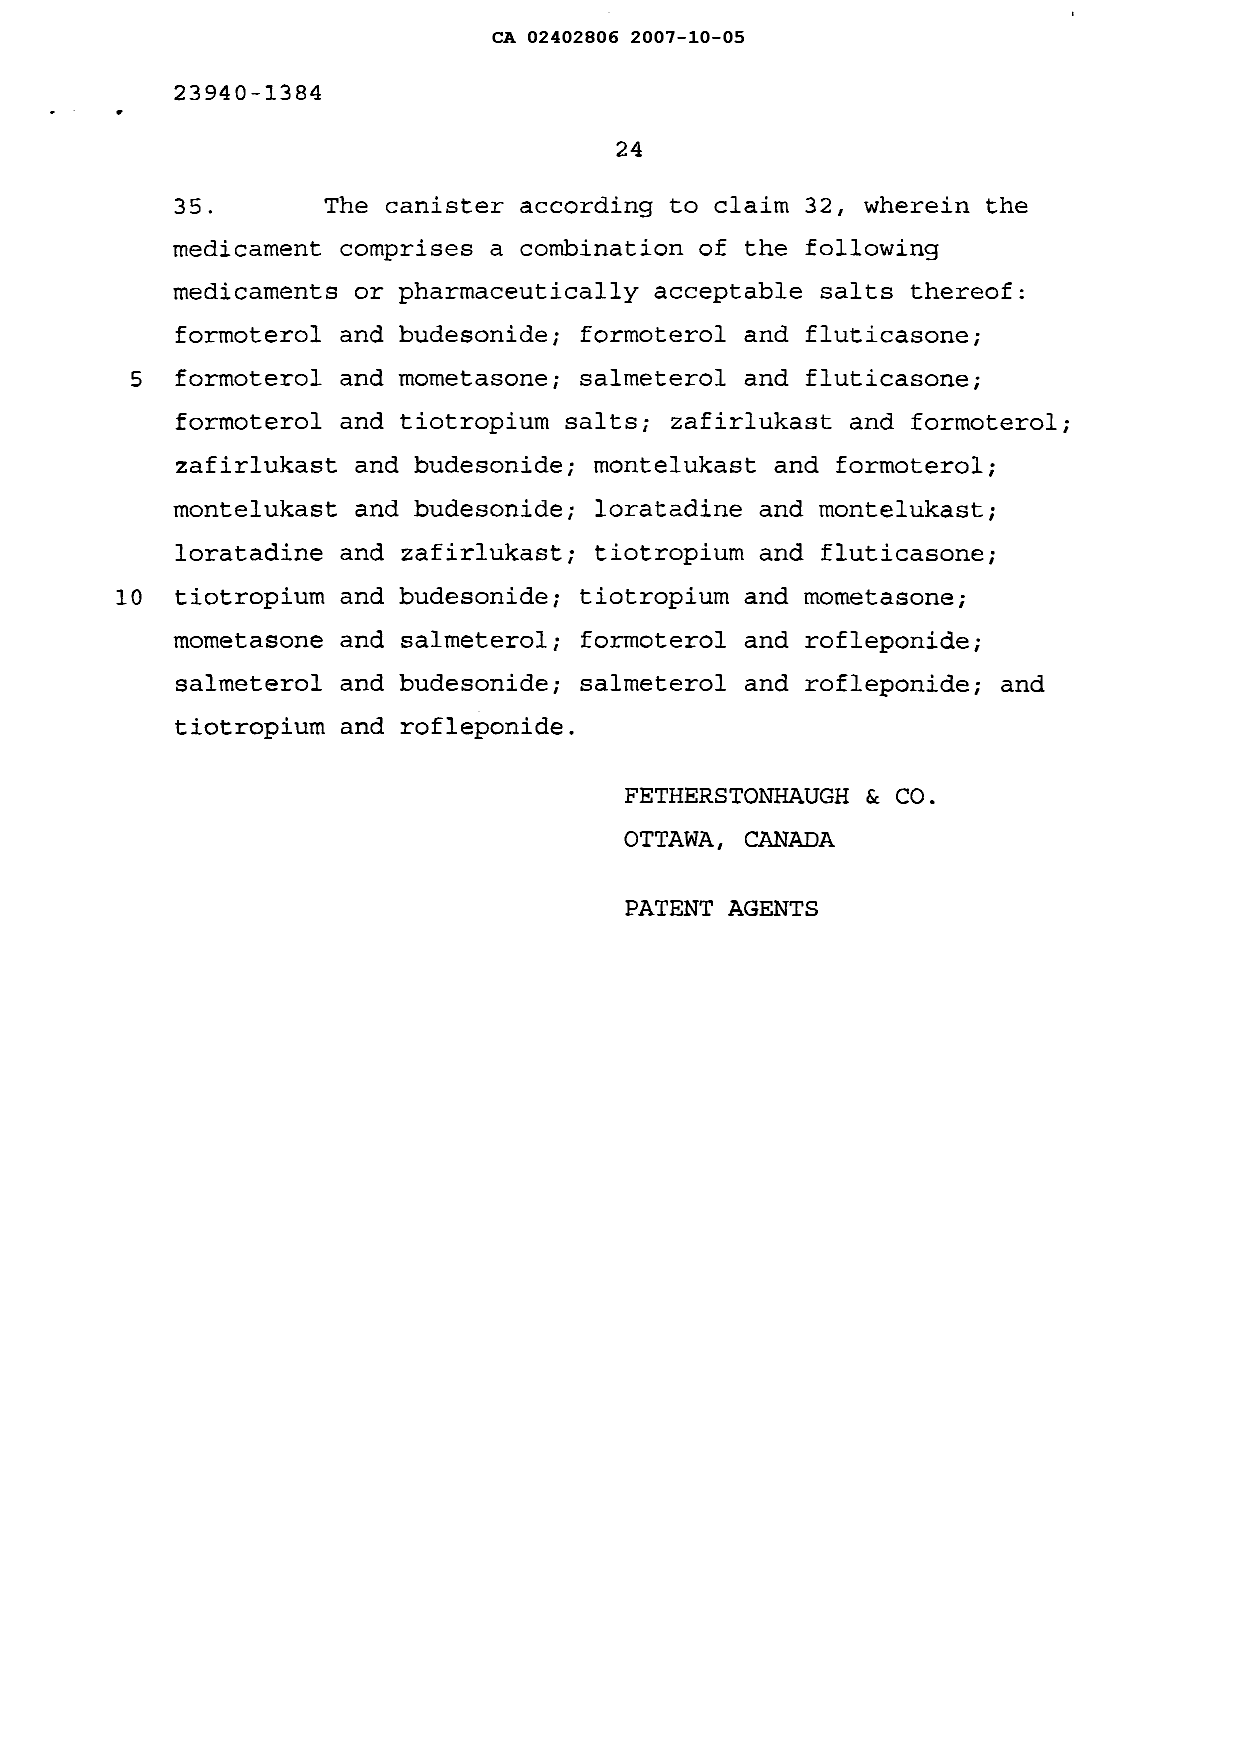 Canadian Patent Document 2402806. Prosecution-Amendment 20071005. Image 11 of 11